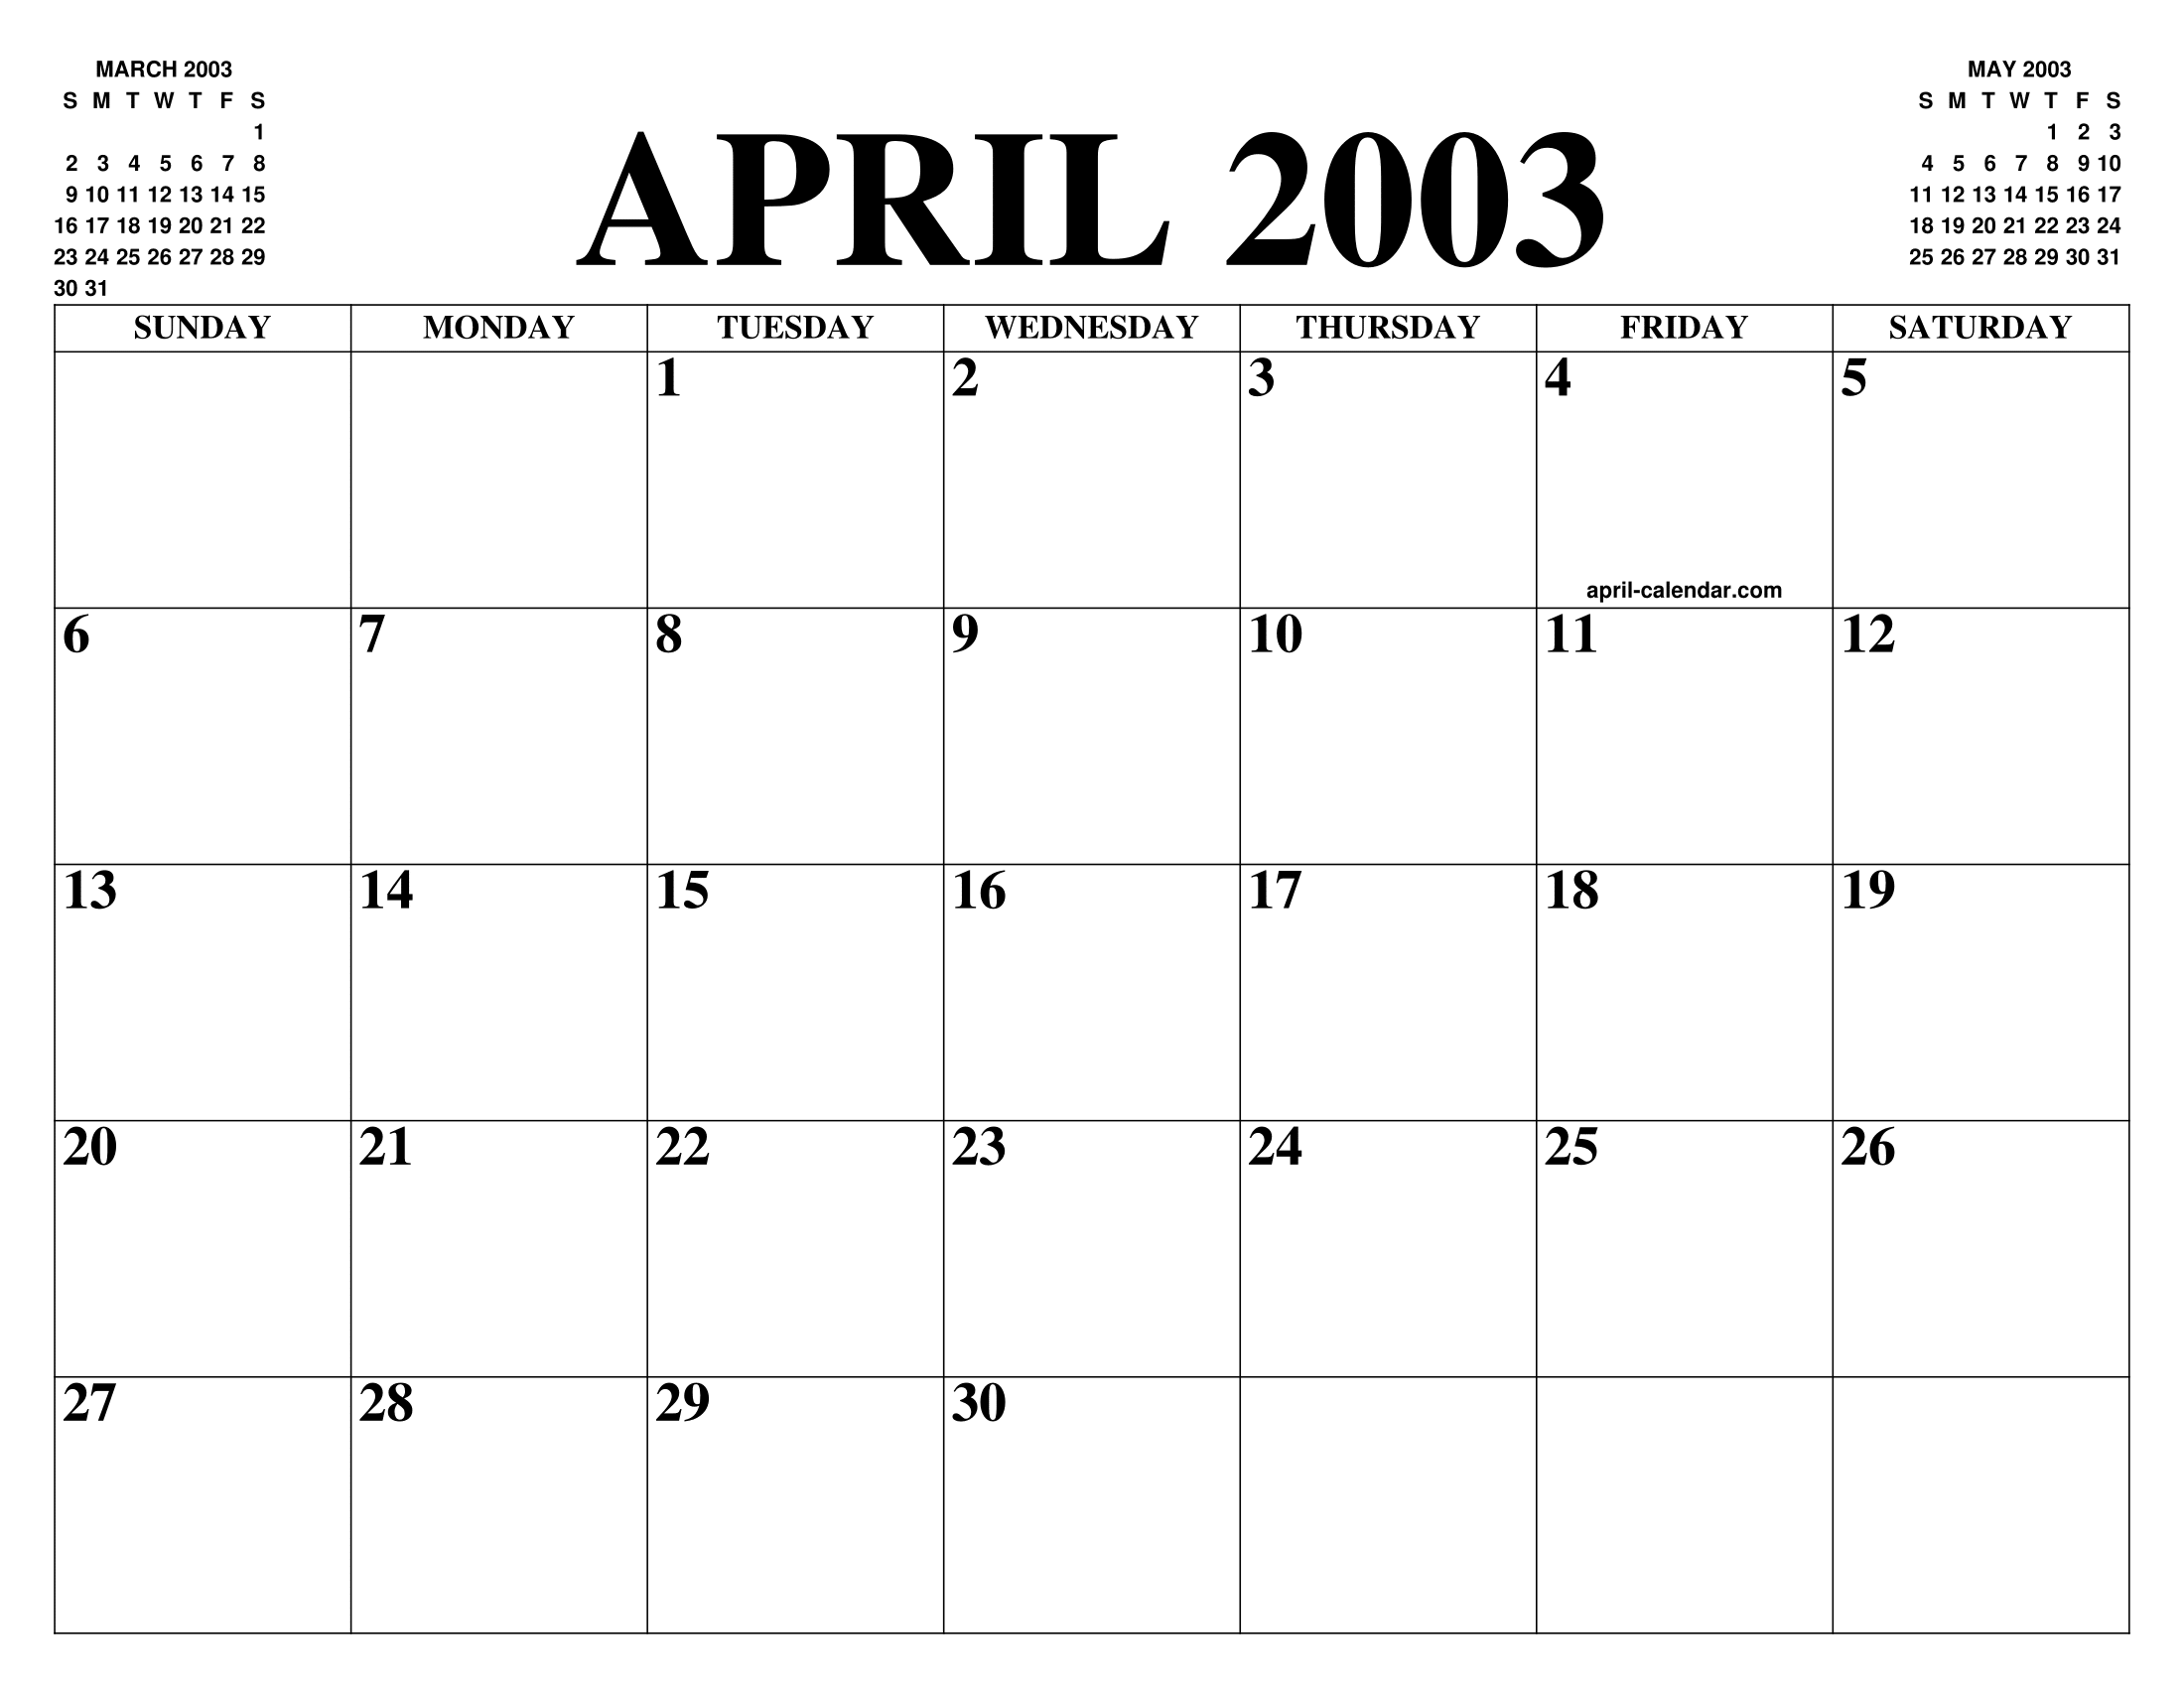 APRIL 2003 CALENDAR OF THE MONTH: FREE PRINTABLE APRIL CALENDAR OF 